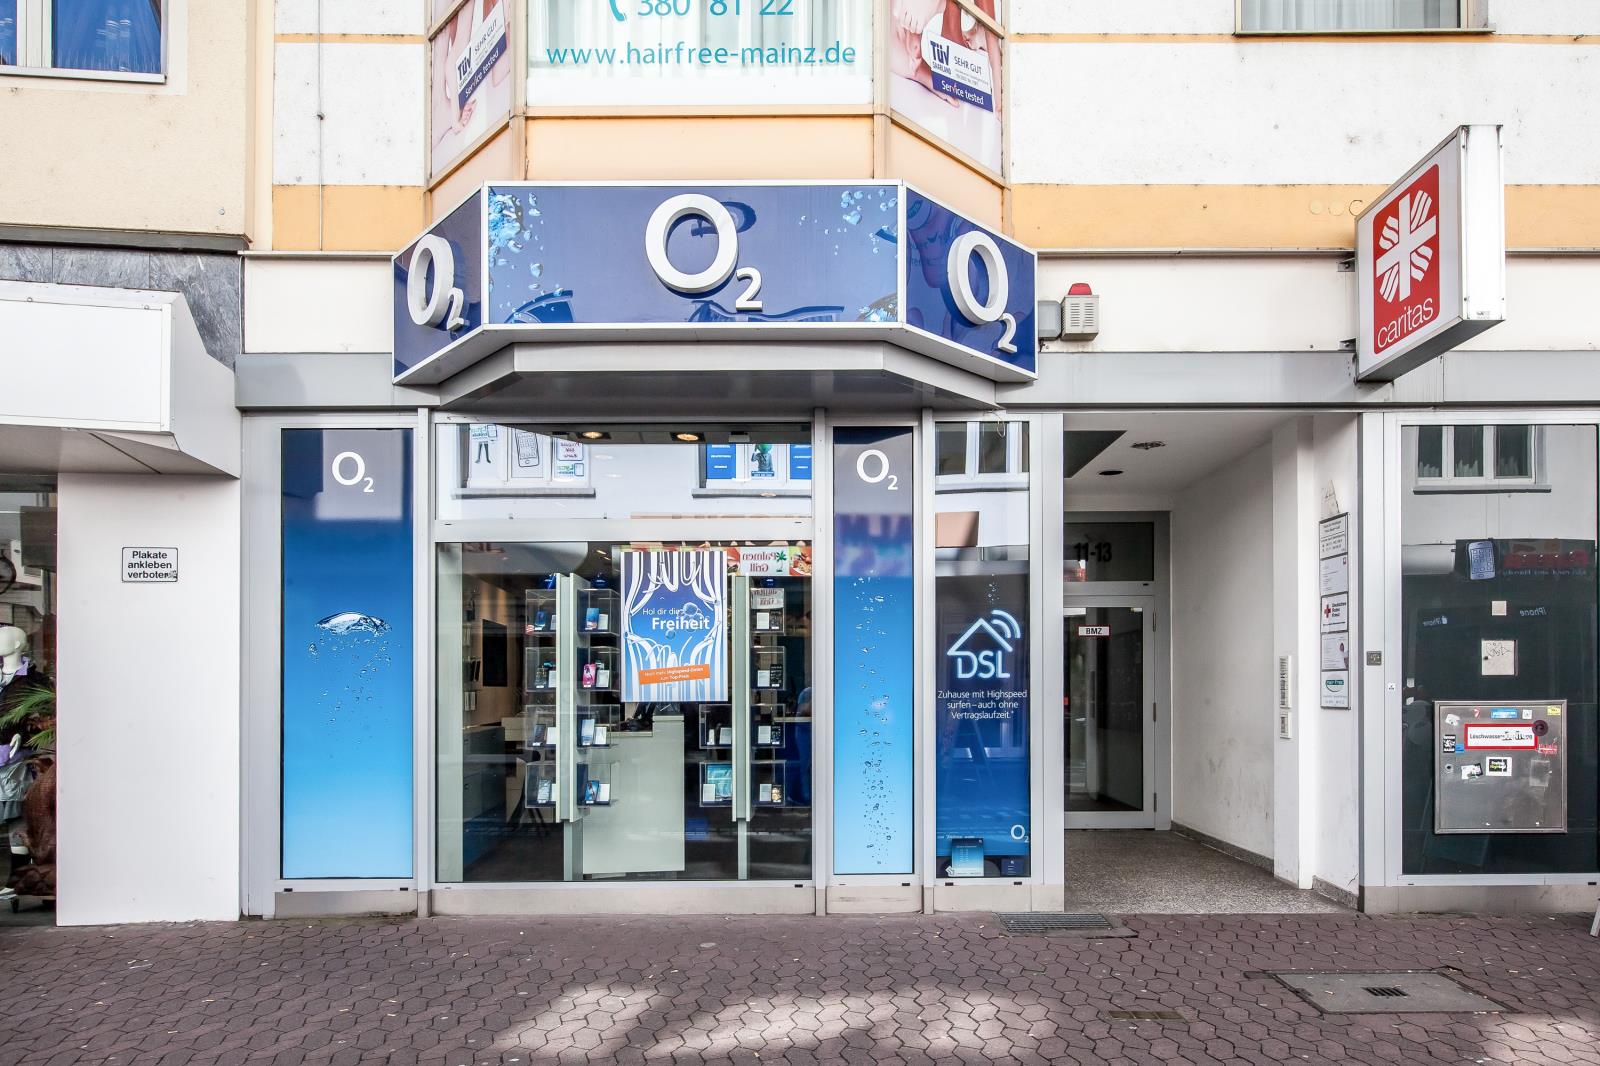 o2 Shop, Lotharstr. 11 in Mainz